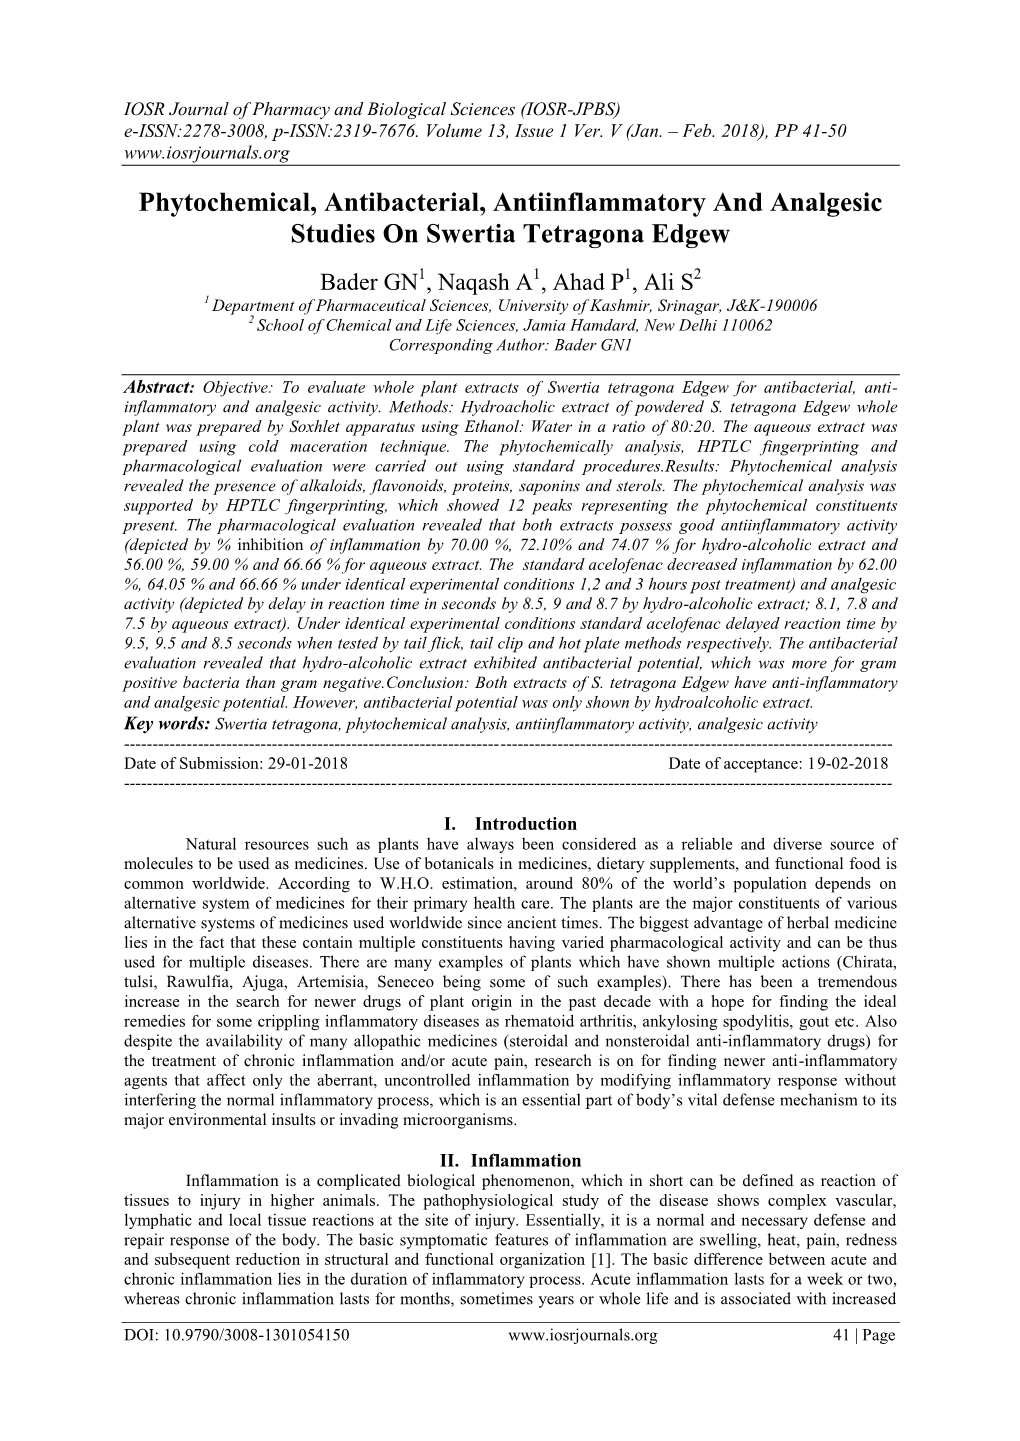 Phytochemical, Antibacterial, Antiinflammatory and Analgesic Studies on Swertia Tetragona Edgew